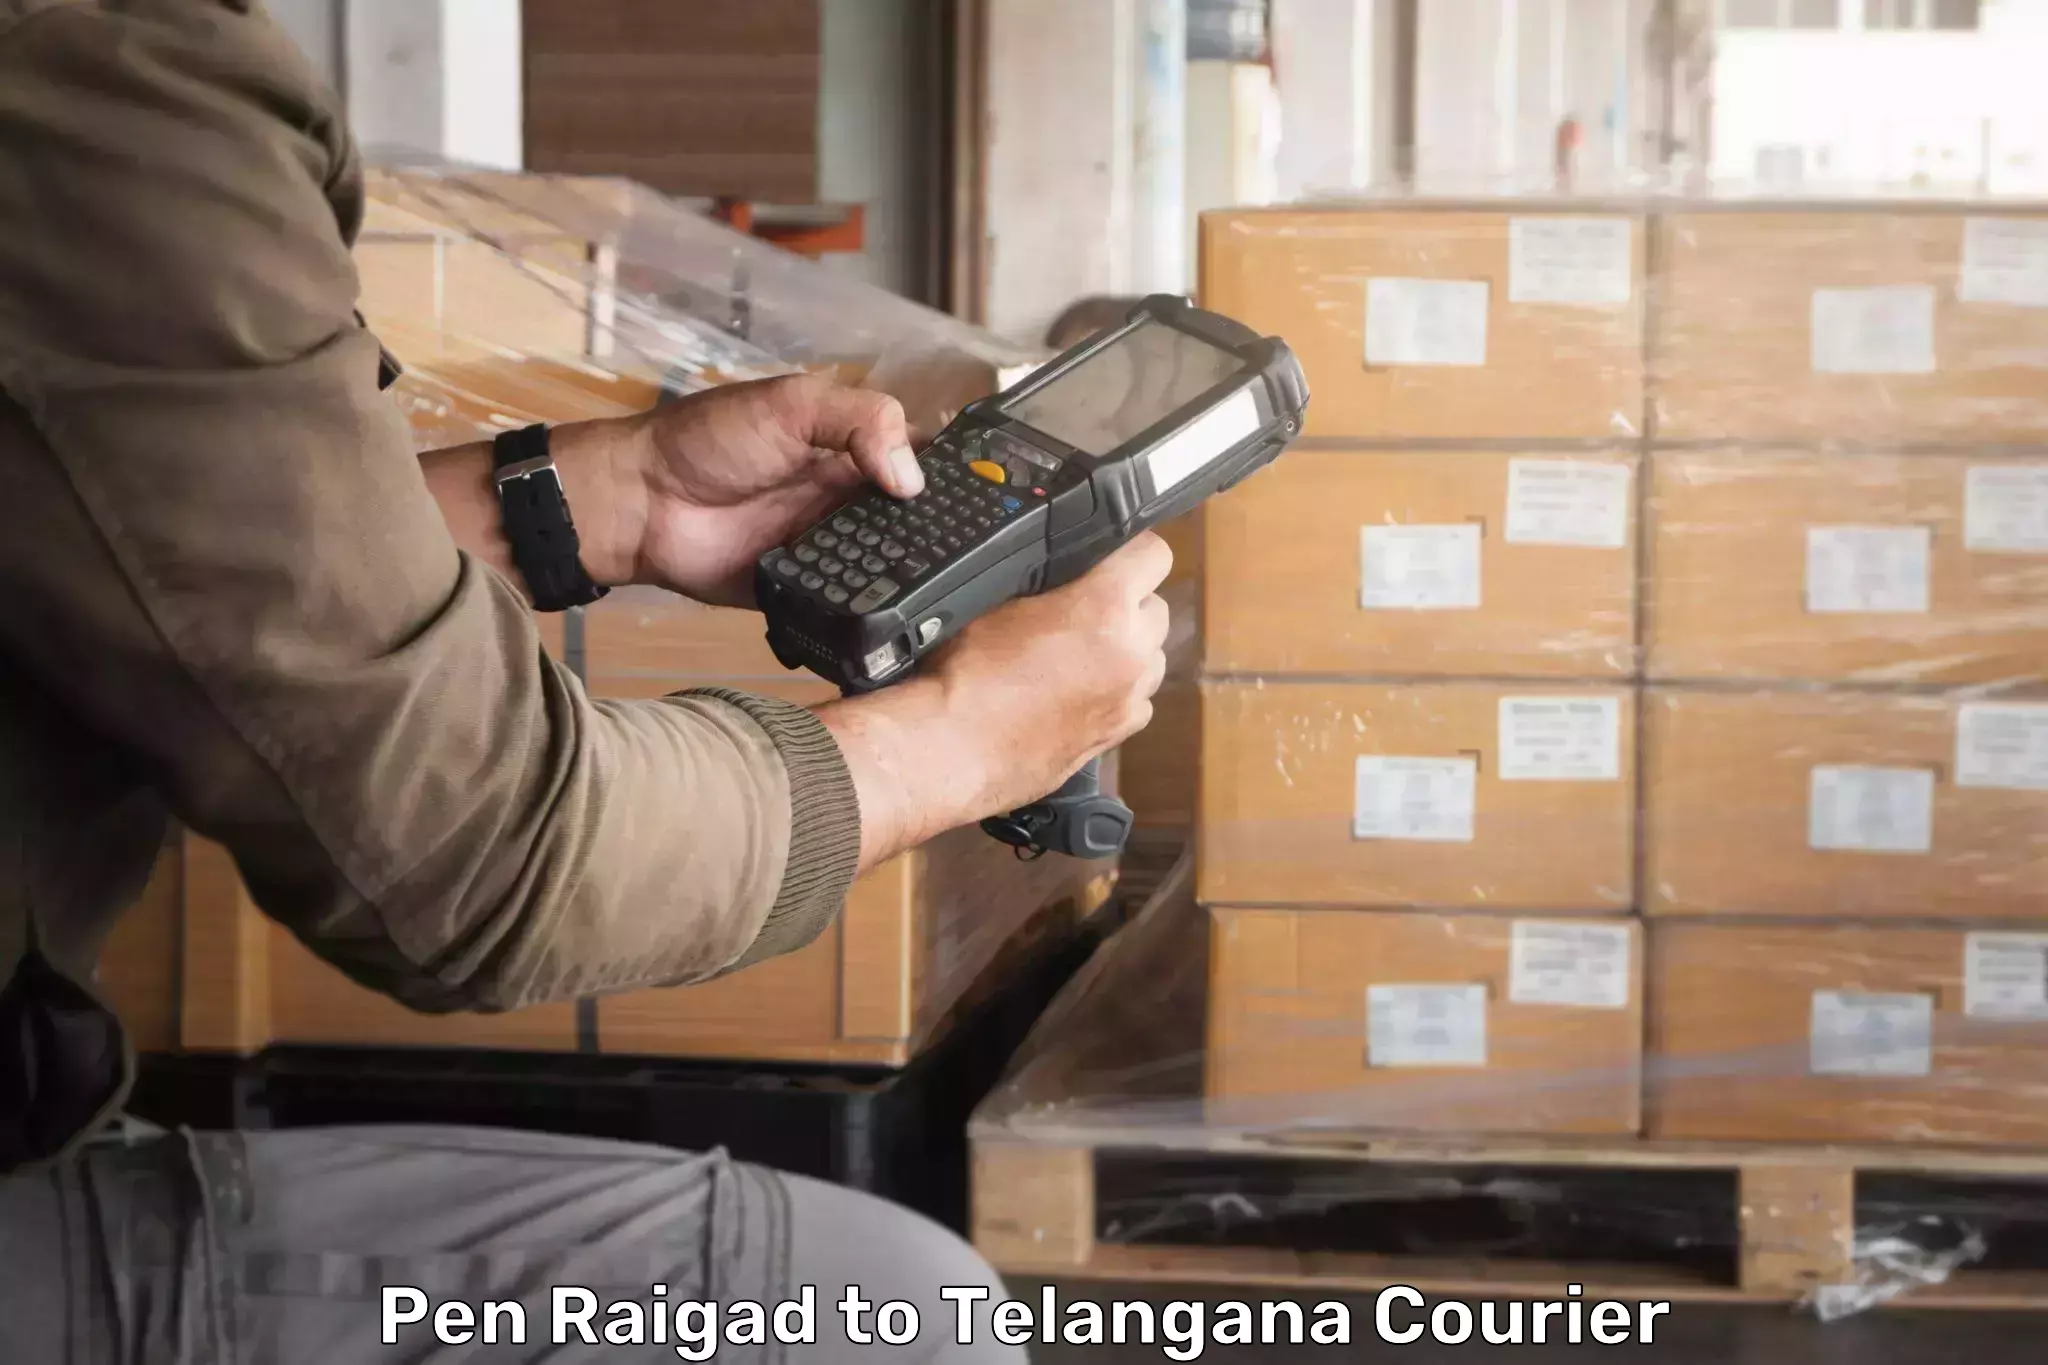 Customer-focused courier Pen Raigad to Bhupalpally